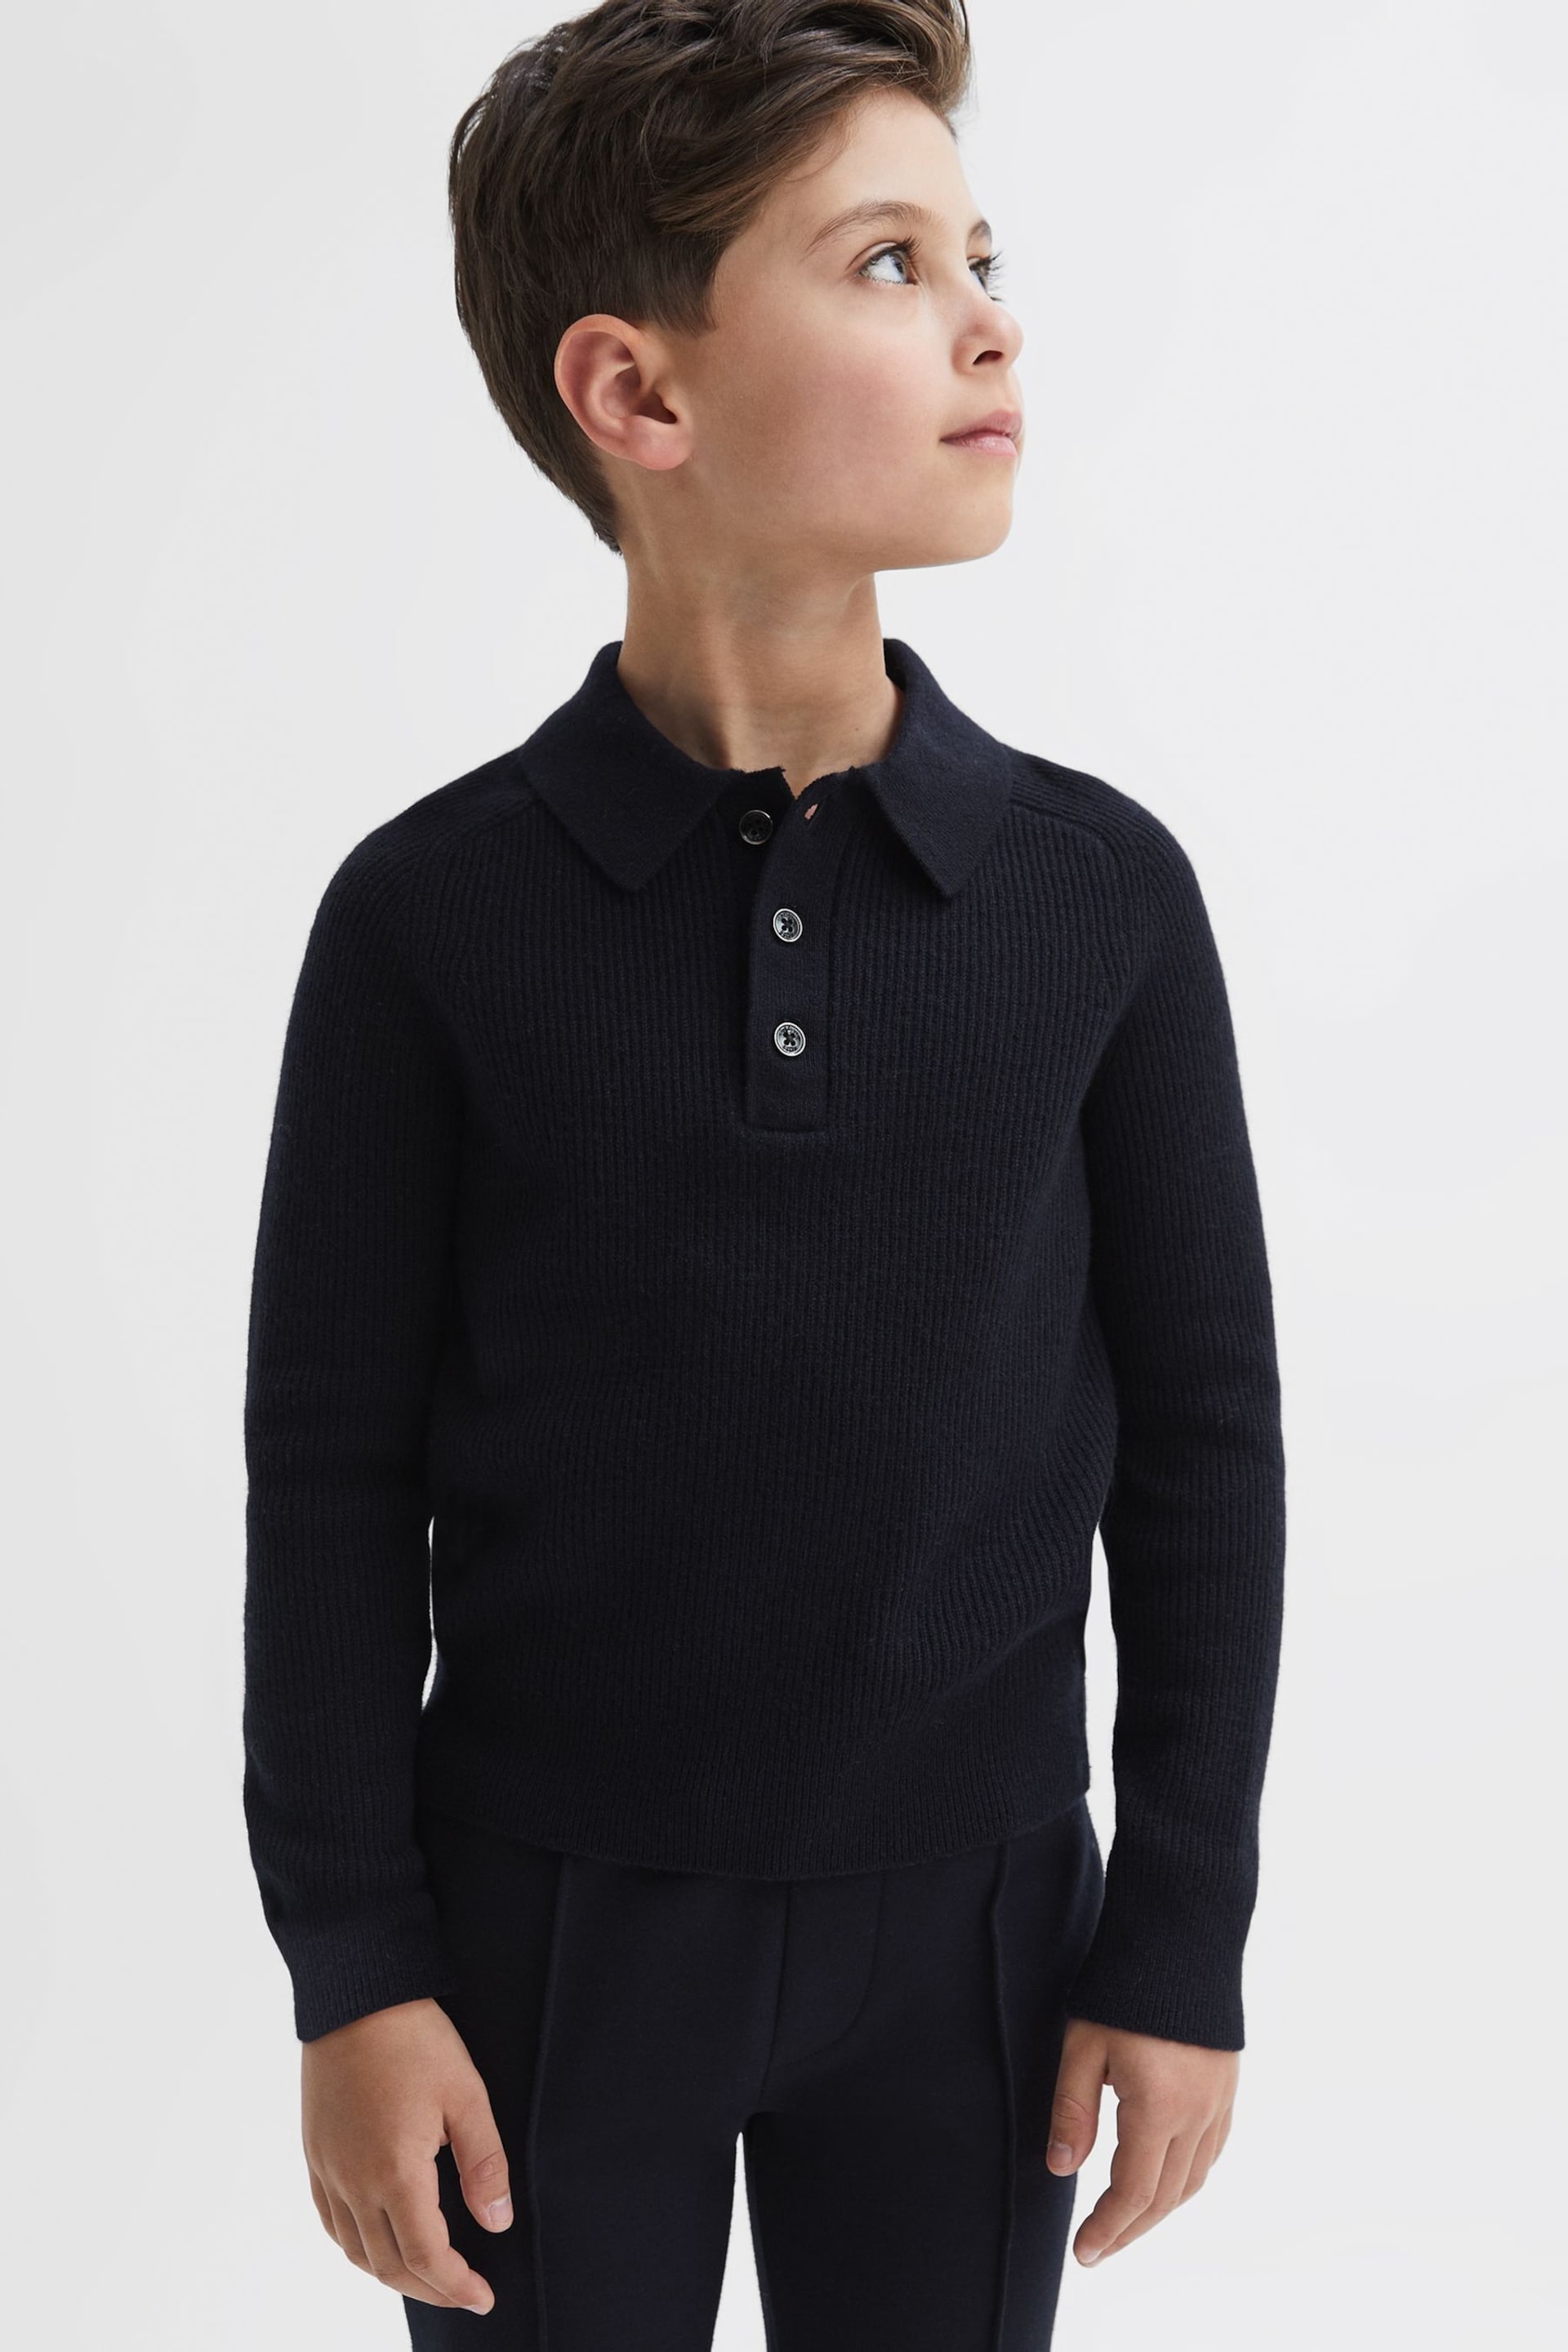 Reiss Navy Holms Junior Merino Wool Polo Shirt - Image 1 of 7